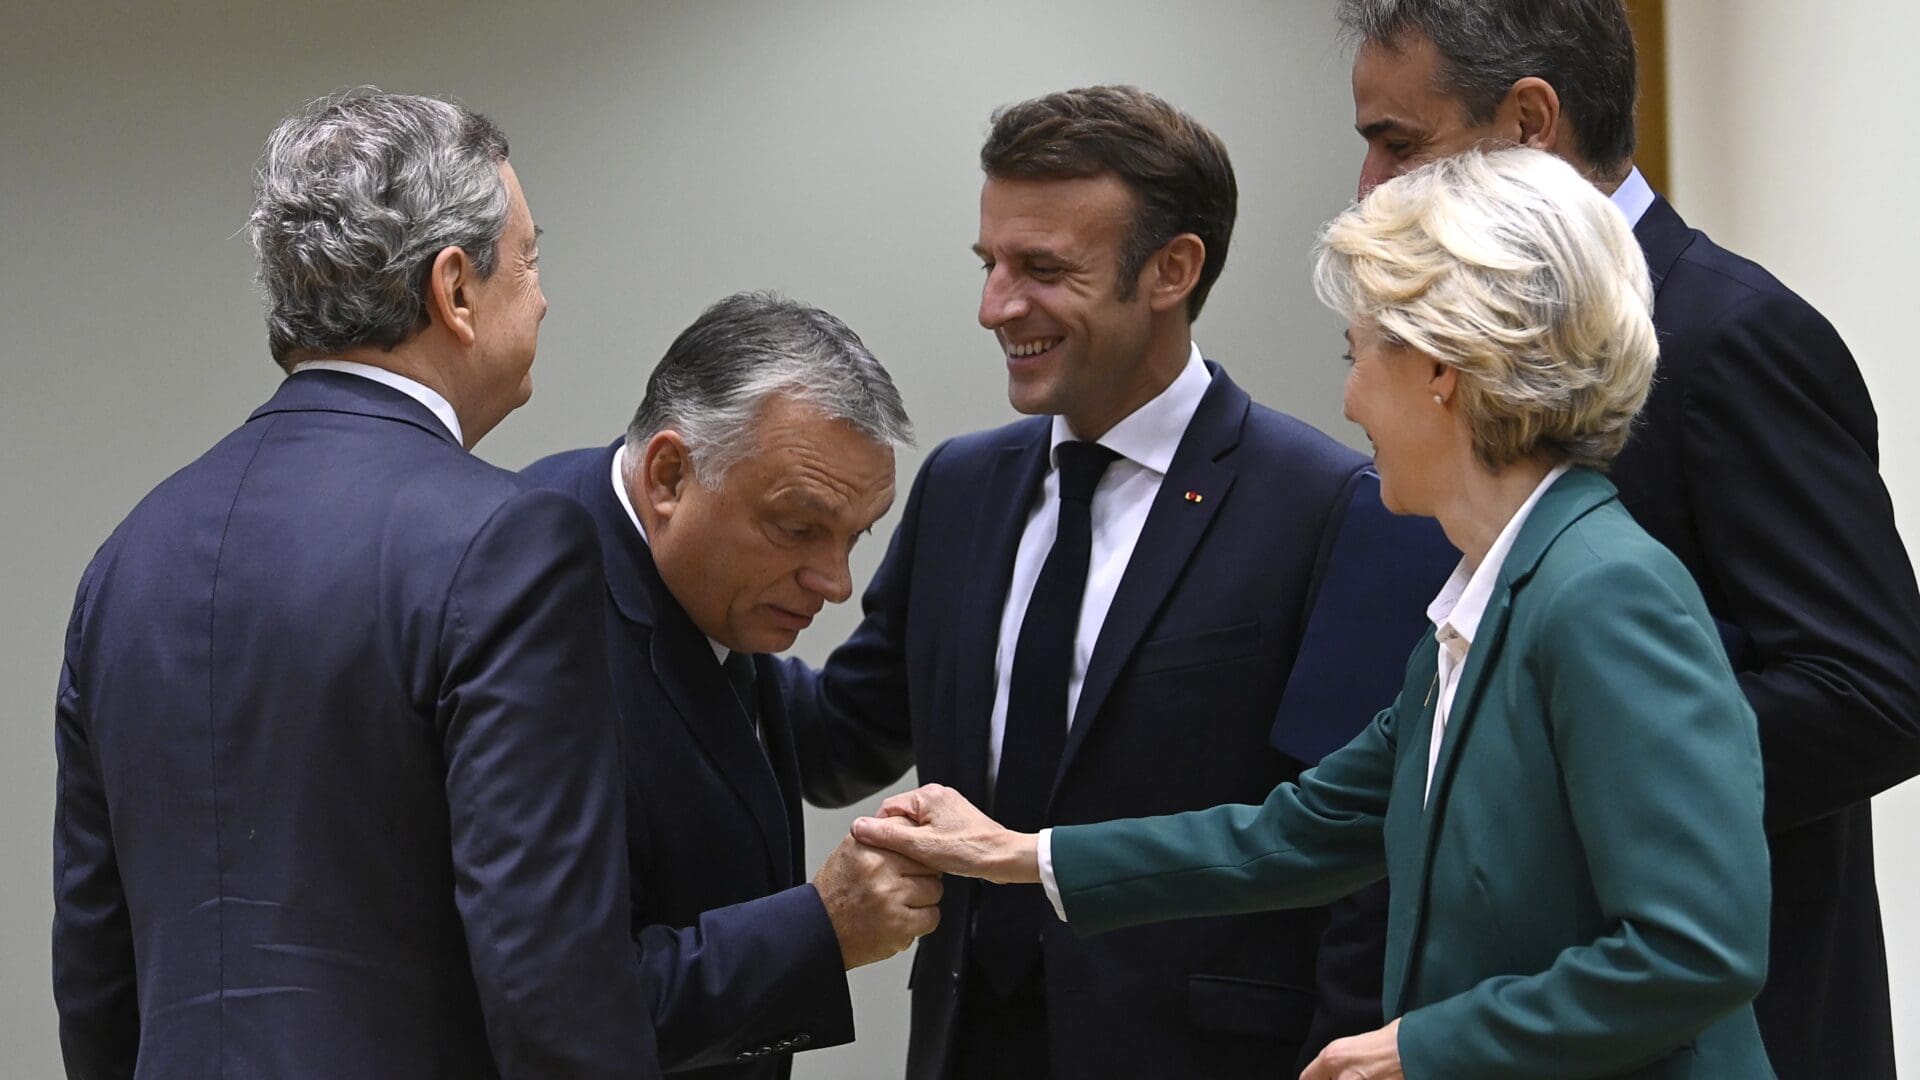 Viktor Orbán about to kiss Ursula von der Leyen’s hand as Emmanuel Macron (C) looks on in Brussels on 21 October 2022.